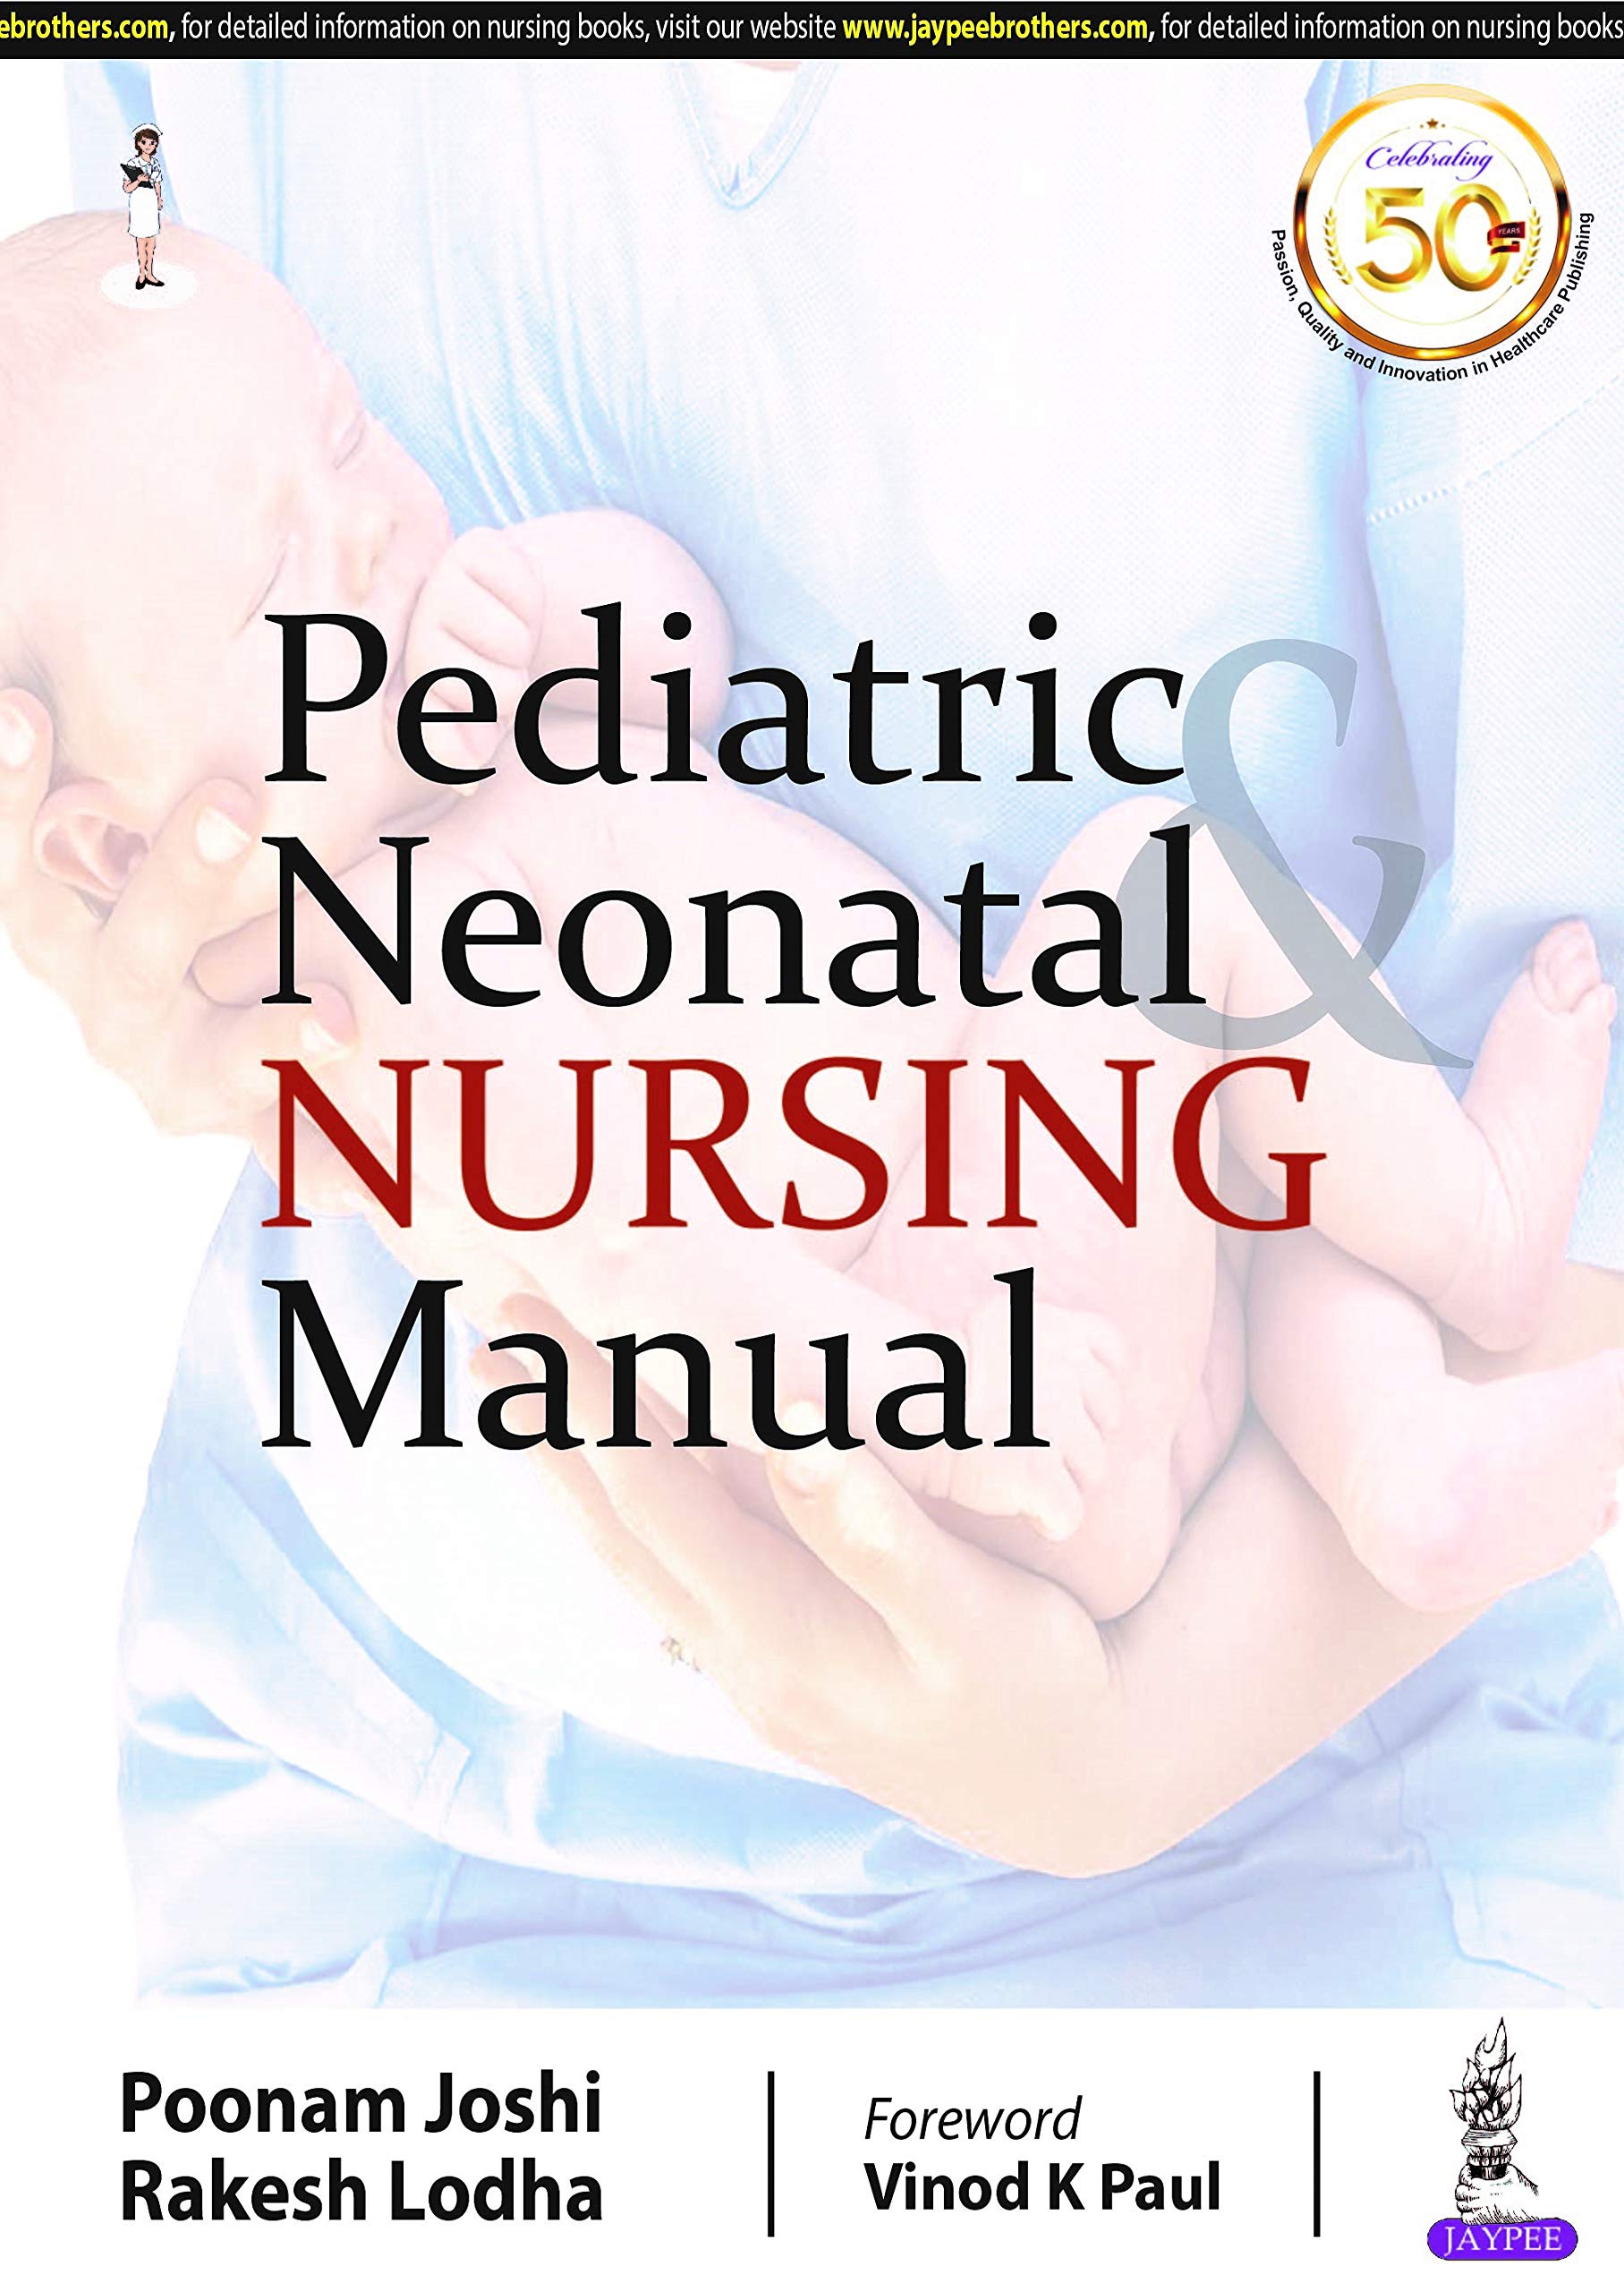 Pediatric & Neonatal Nursing Manual